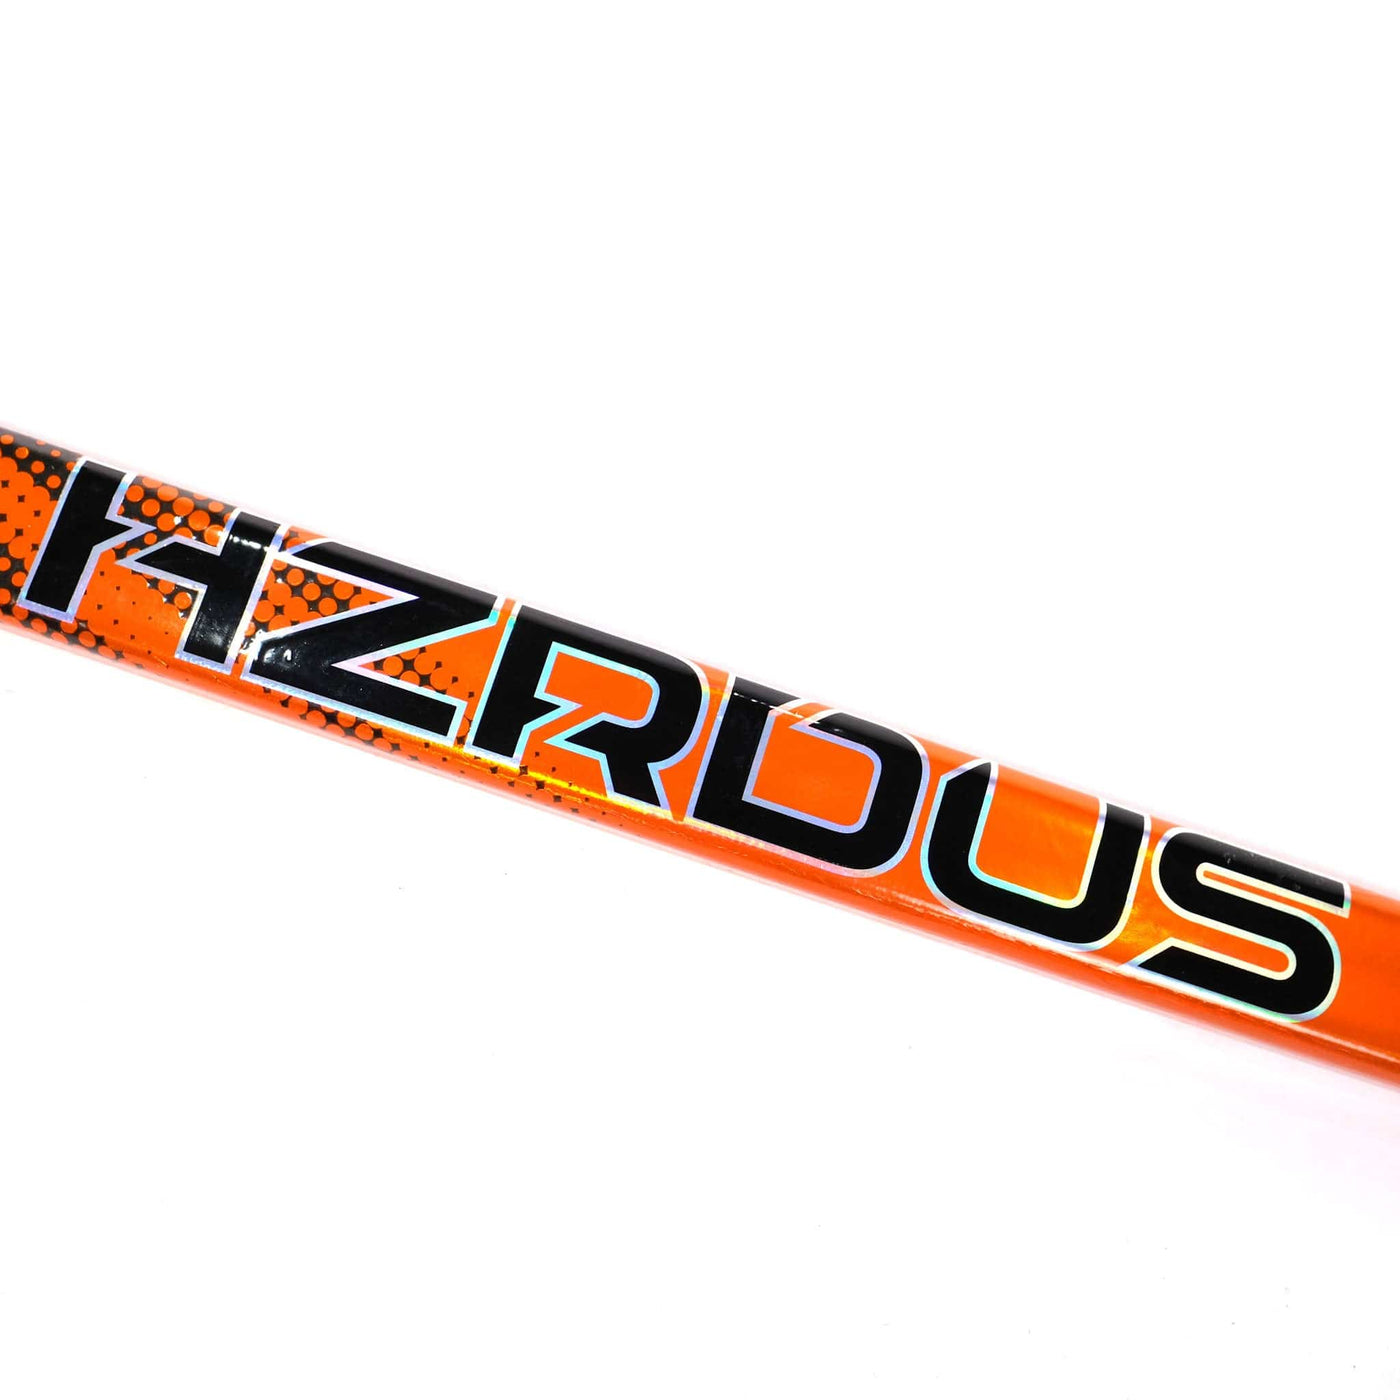 TRUE HZRDUS PX Junior Hockey Stick - 30 Flex - The Hockey Shop Source For Sports